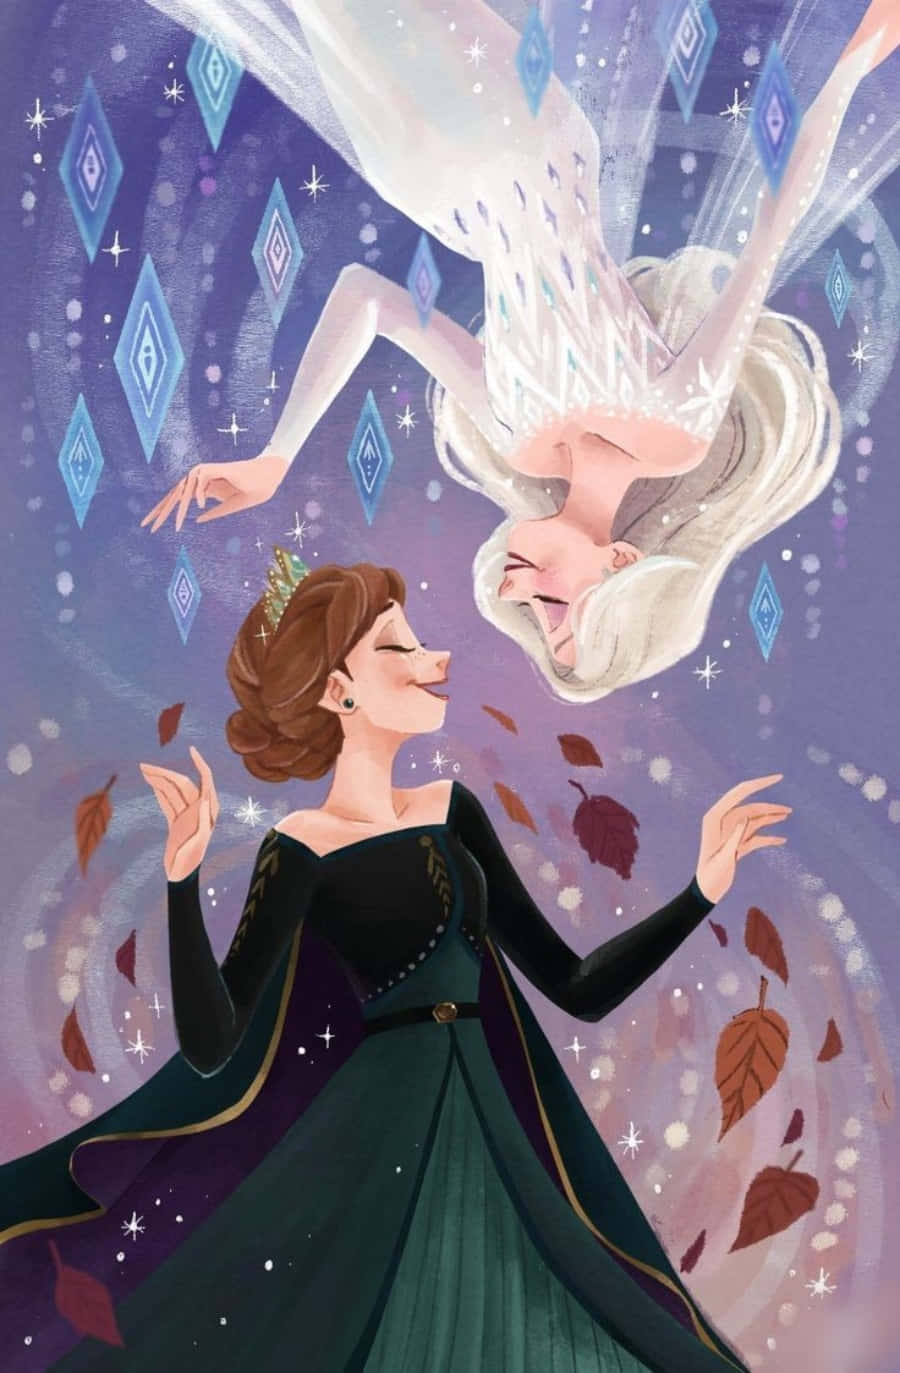 The magical bond between Anna and Elsa.